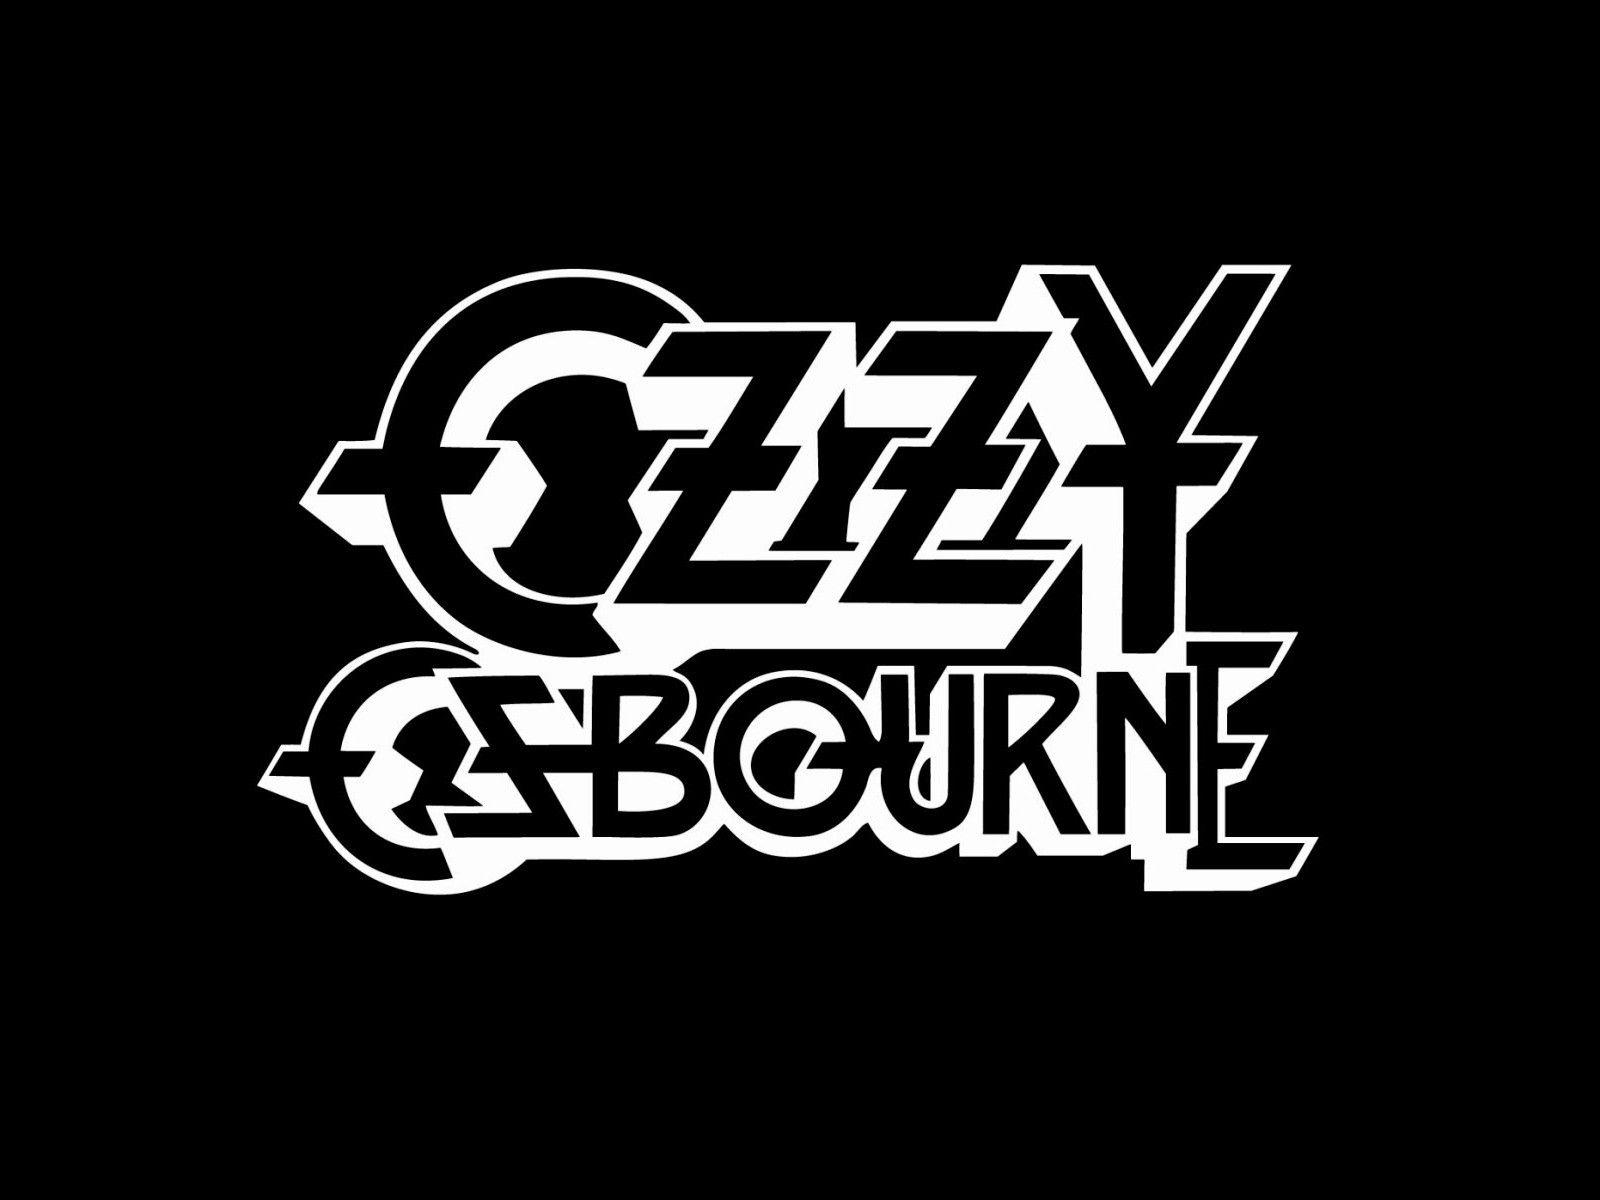 Ozzy Osbourne Logo - Turning 25: Ozzy Osbourne